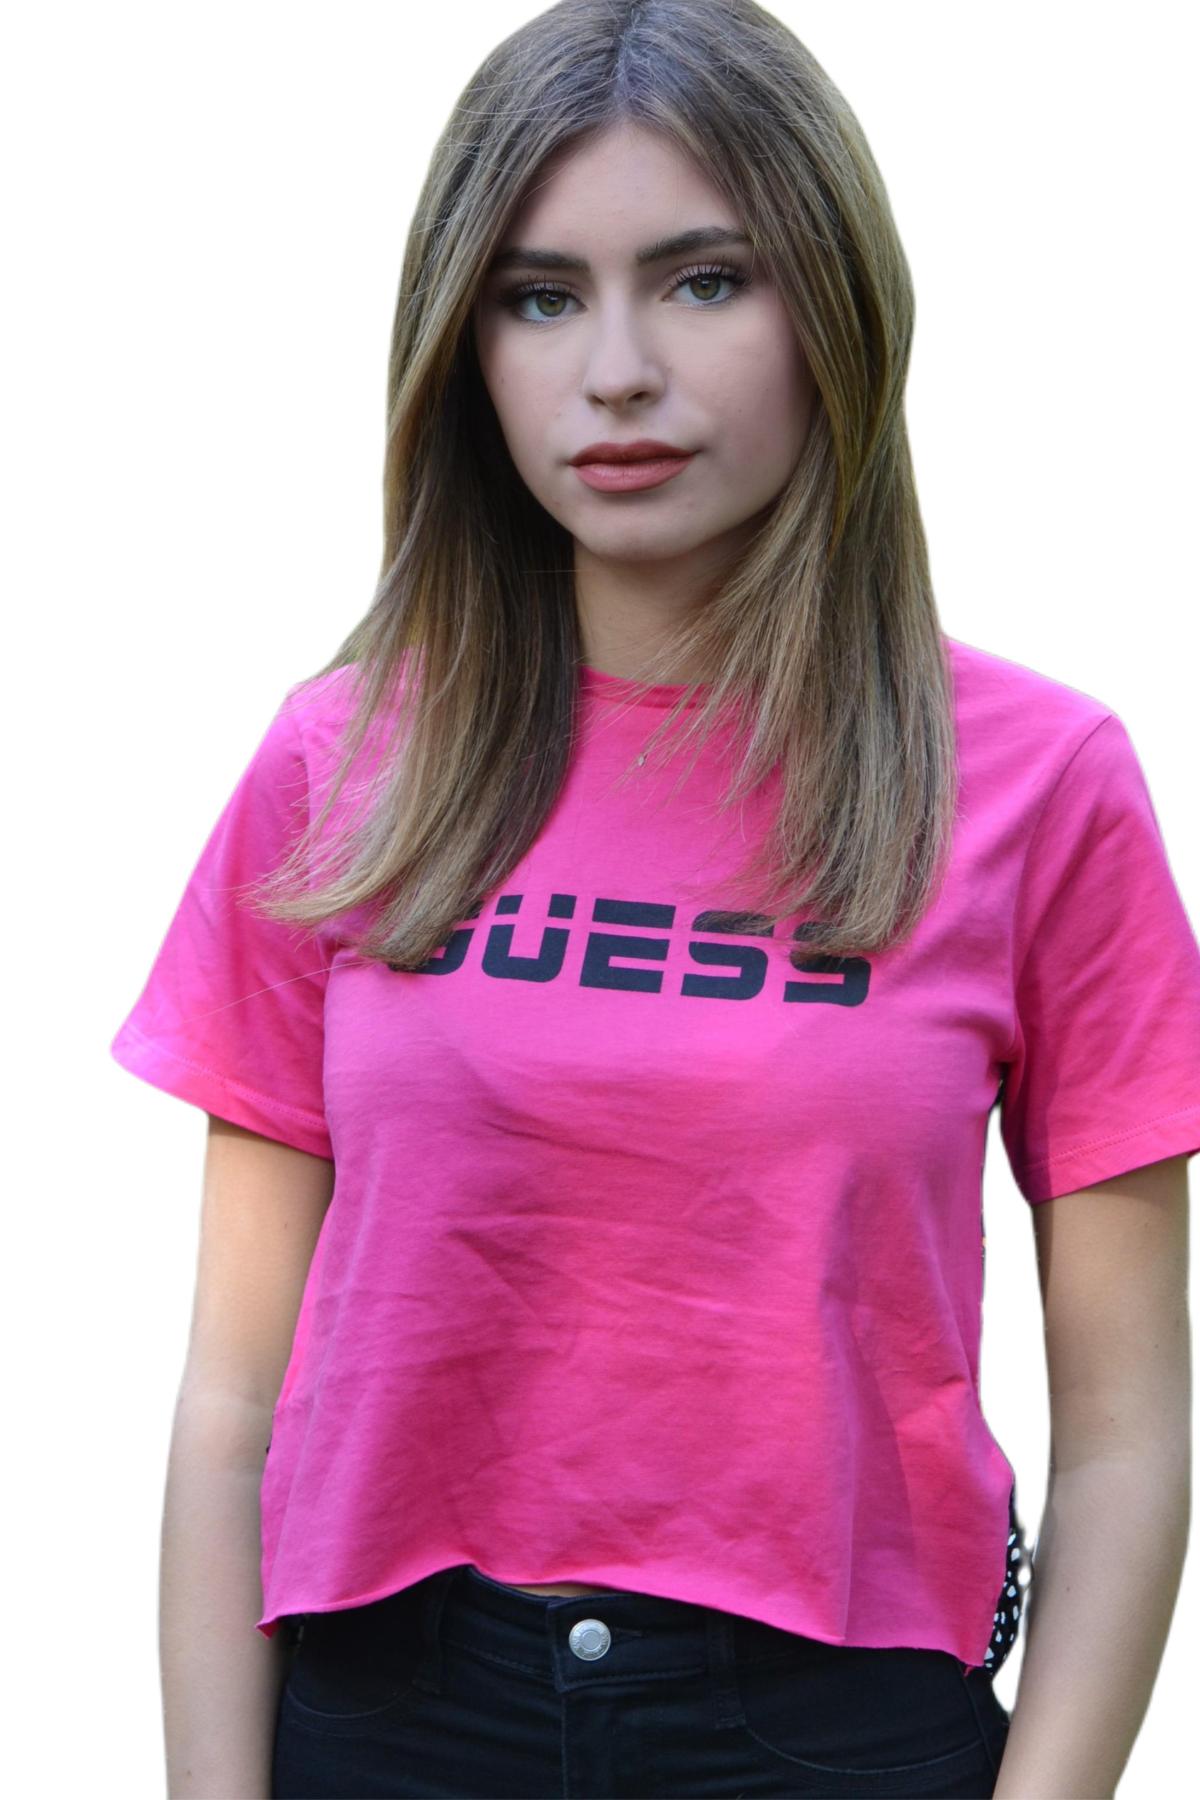 Tee-shirt rose pour femme à manches courtes Guess - O02a22